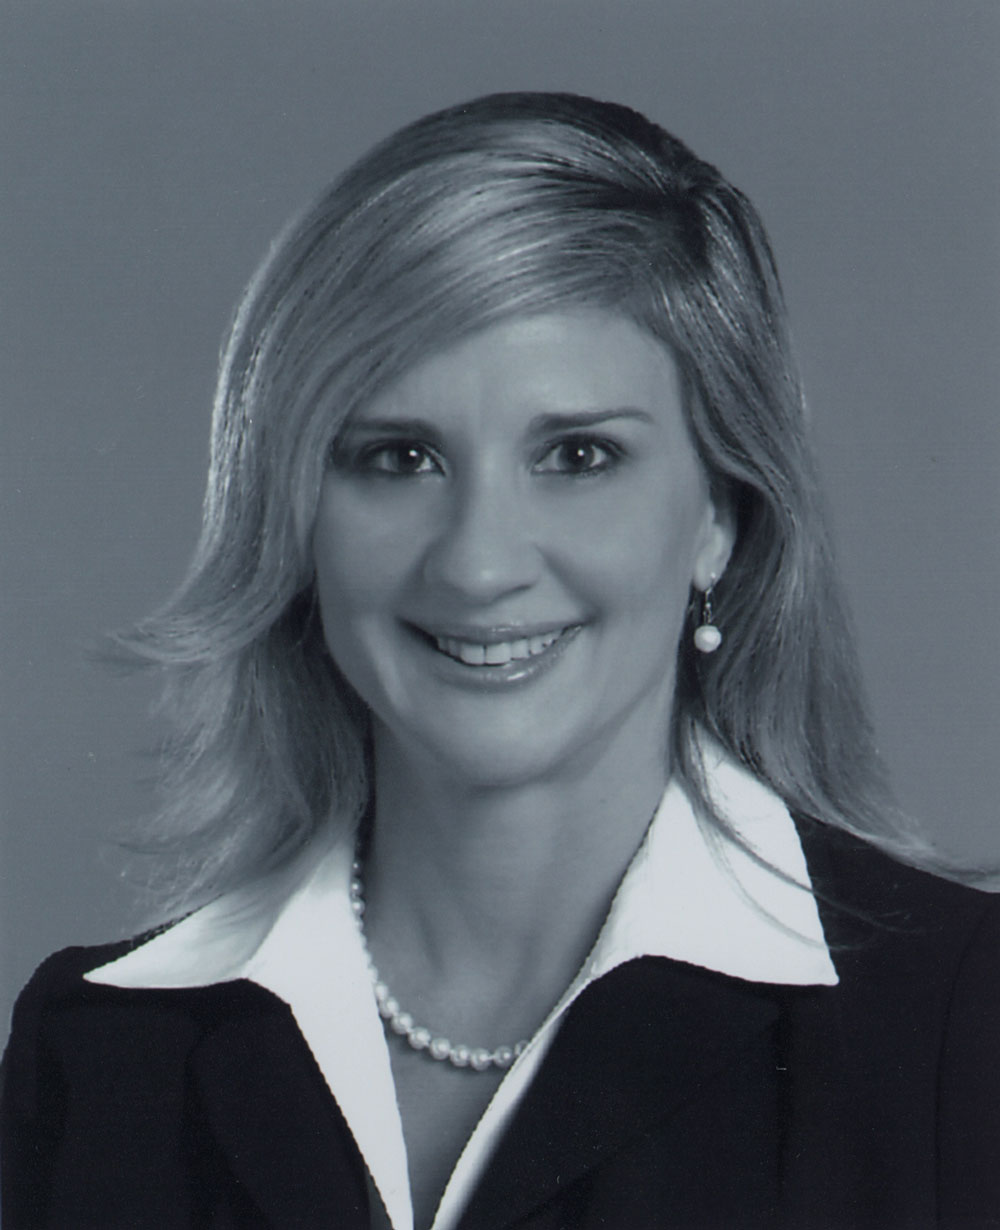 Kathy Barbour, PRSA President of 2015